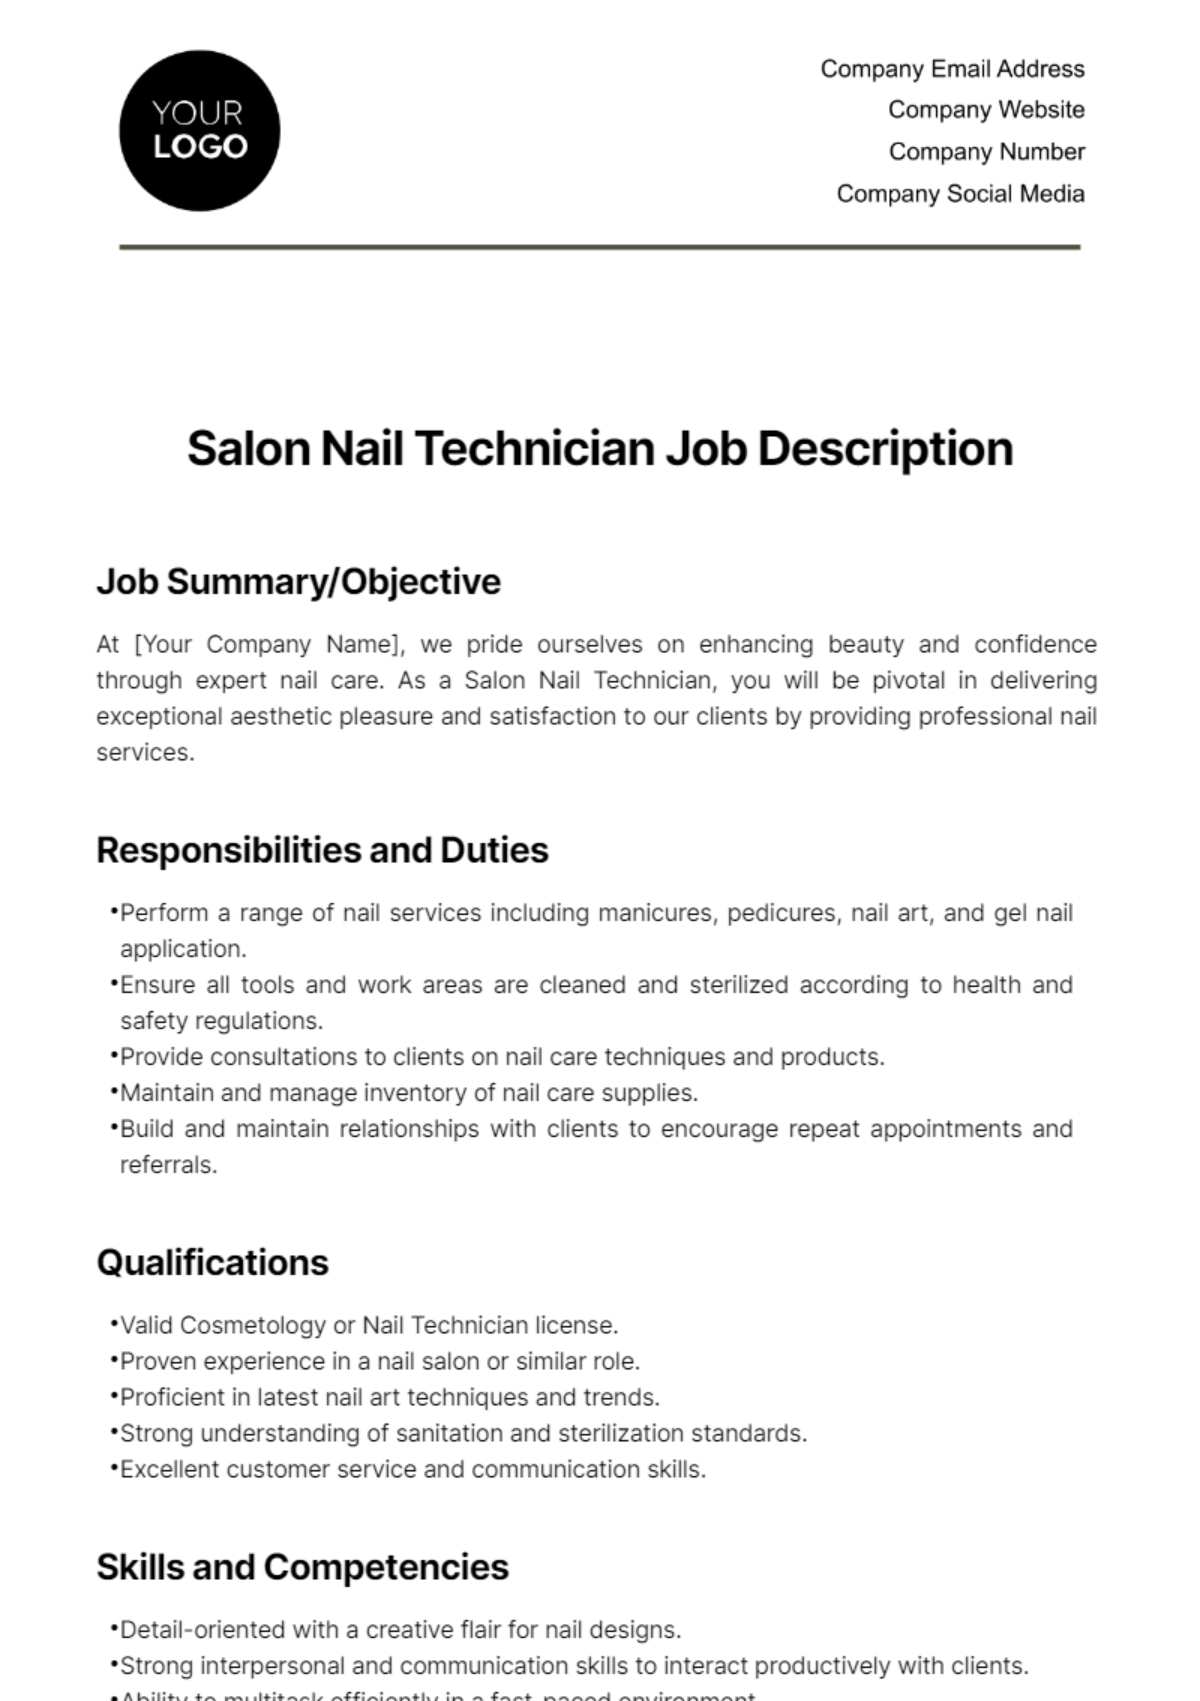 Free Salon Nail Technician Job Description Template